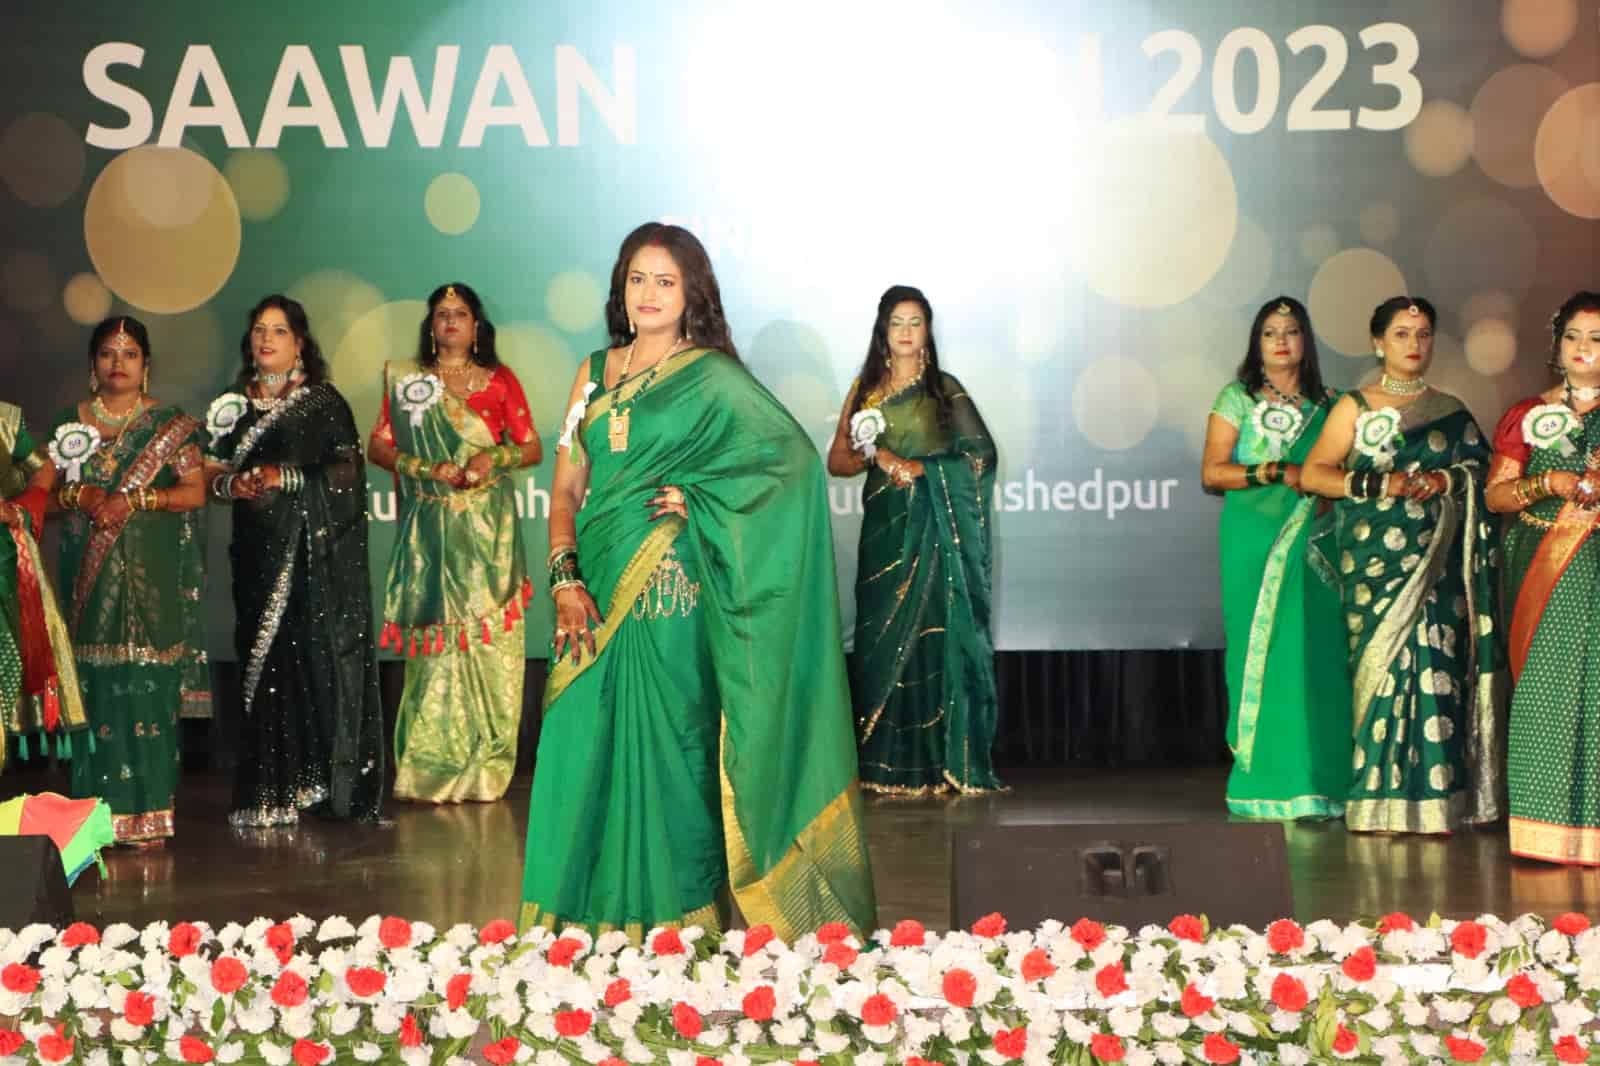 Tata Steel Foundation's Saawan Queen 2023 celebrates women; winners honored in singing, dancing, and performing arts.